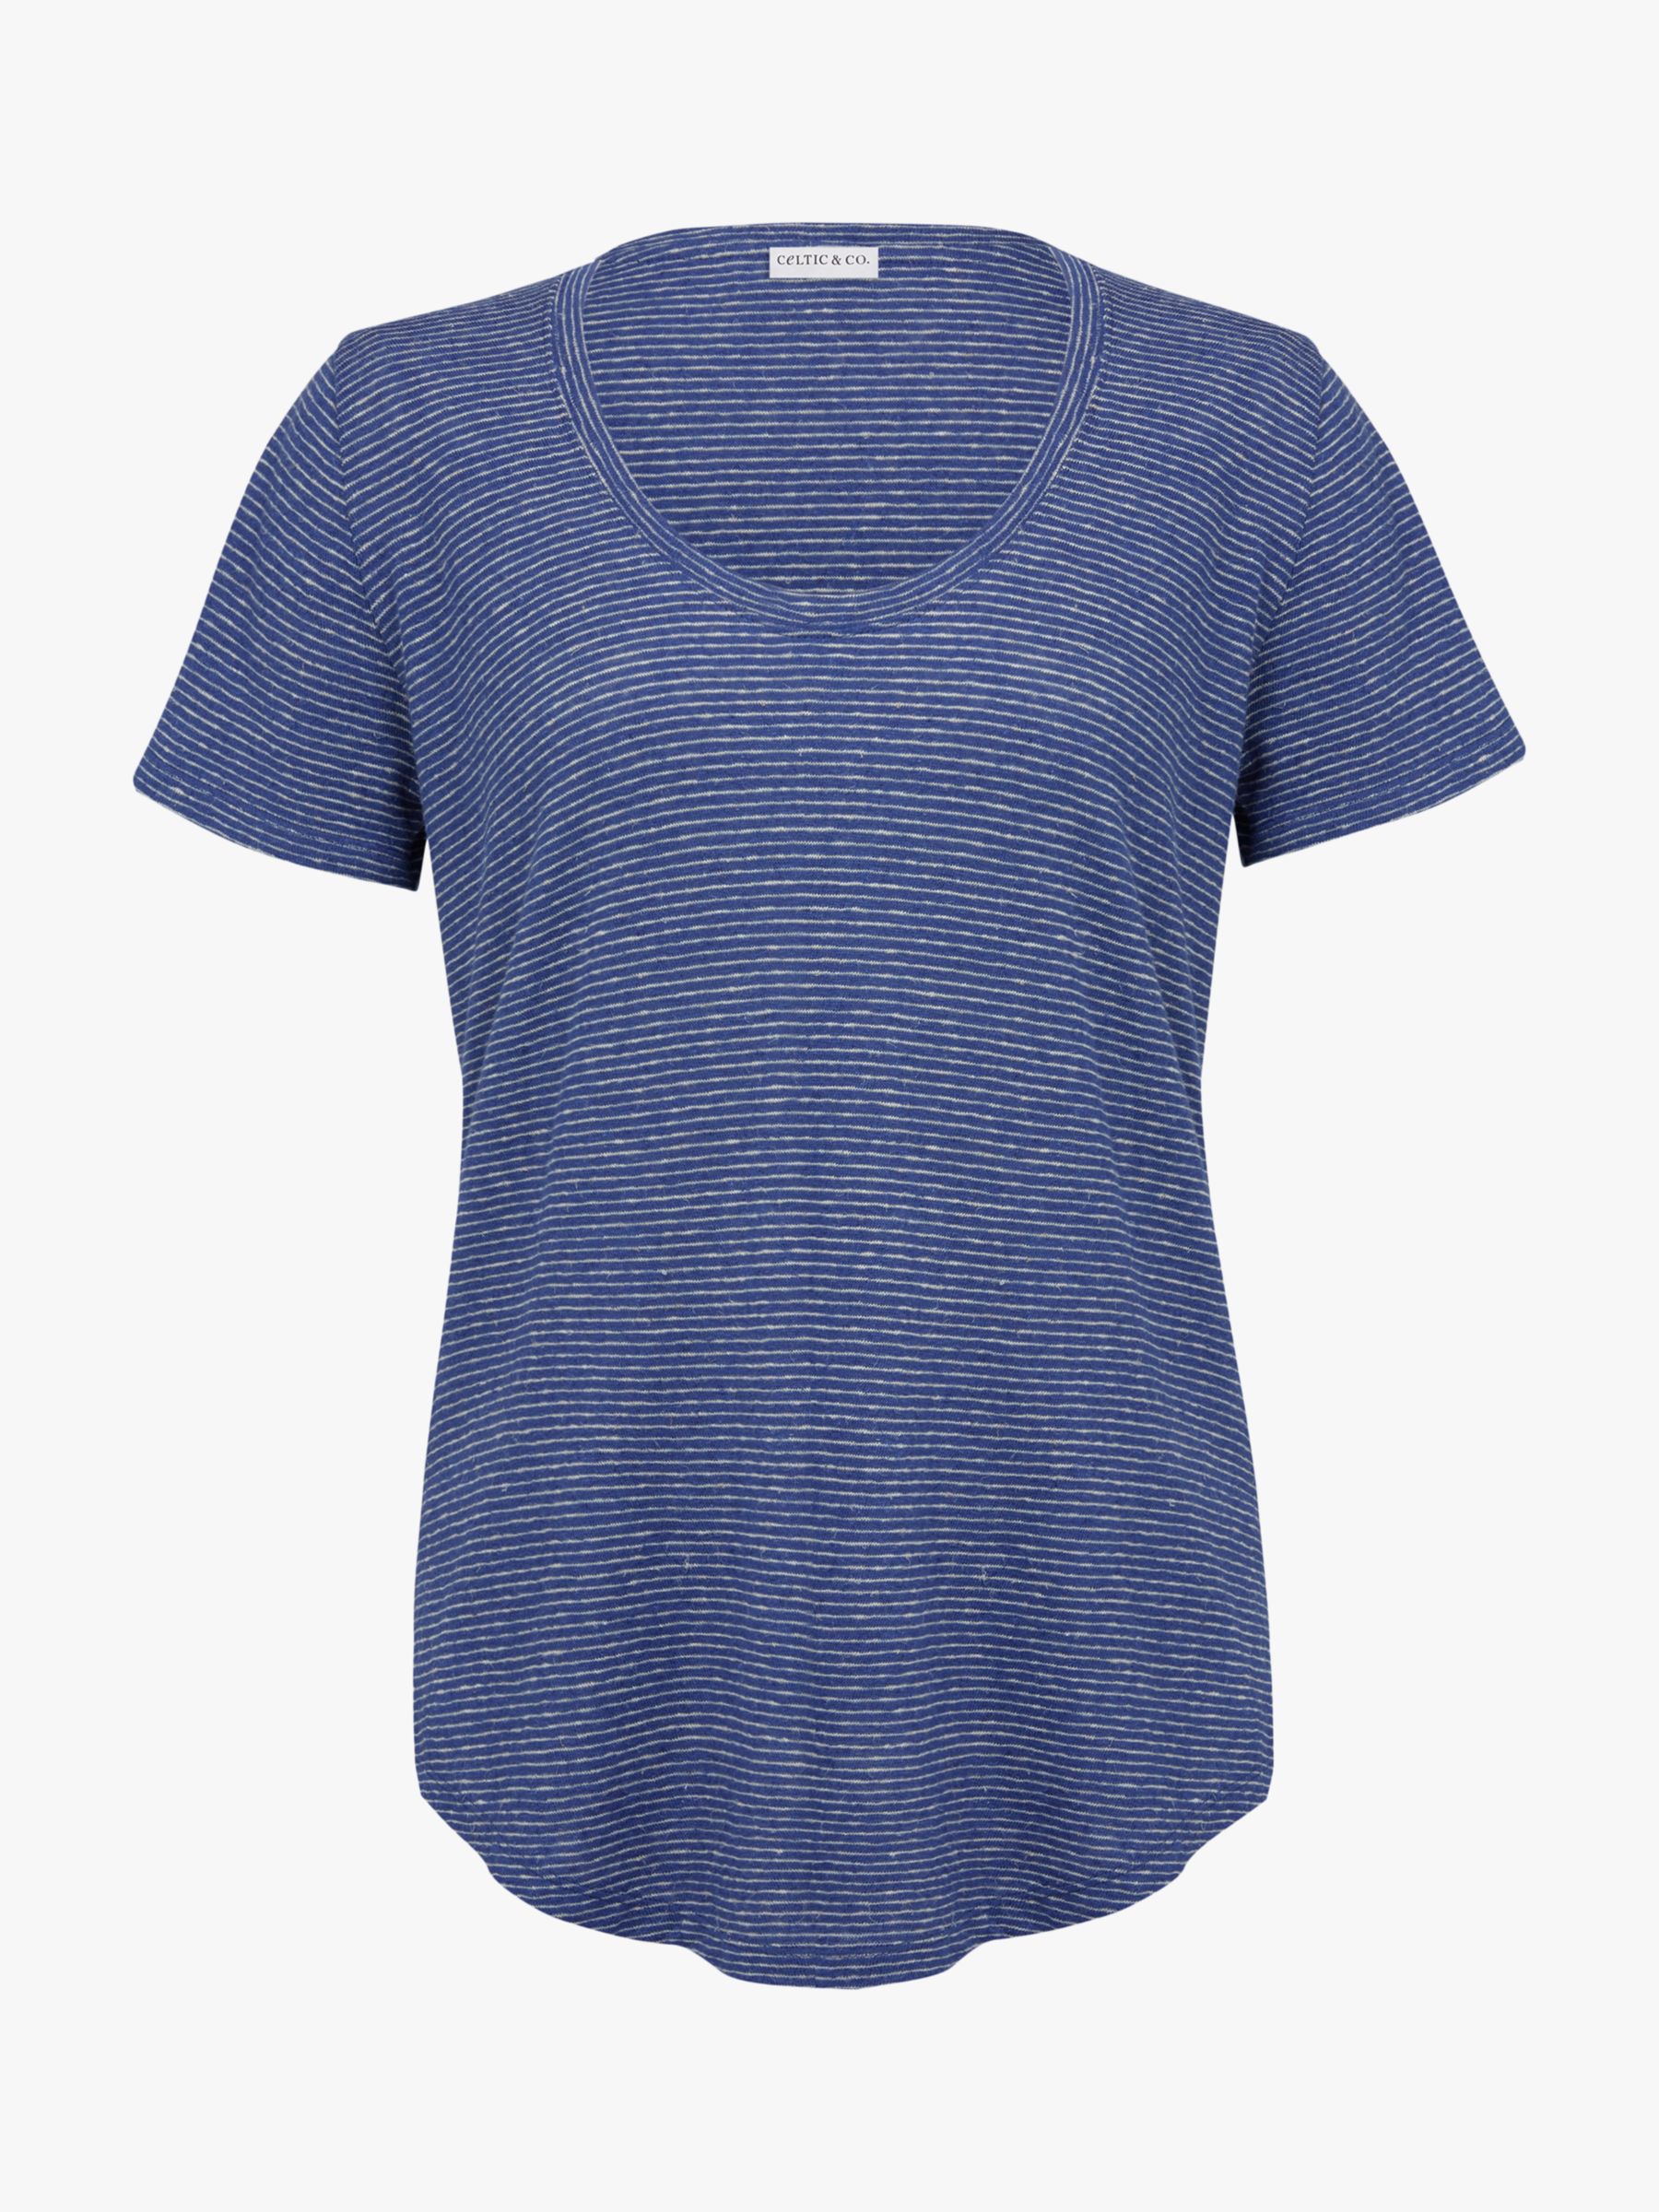 Buy Celtic & Co. Linen Cotton Blend Striped Scoop Neck T-Shirt Online at johnlewis.com